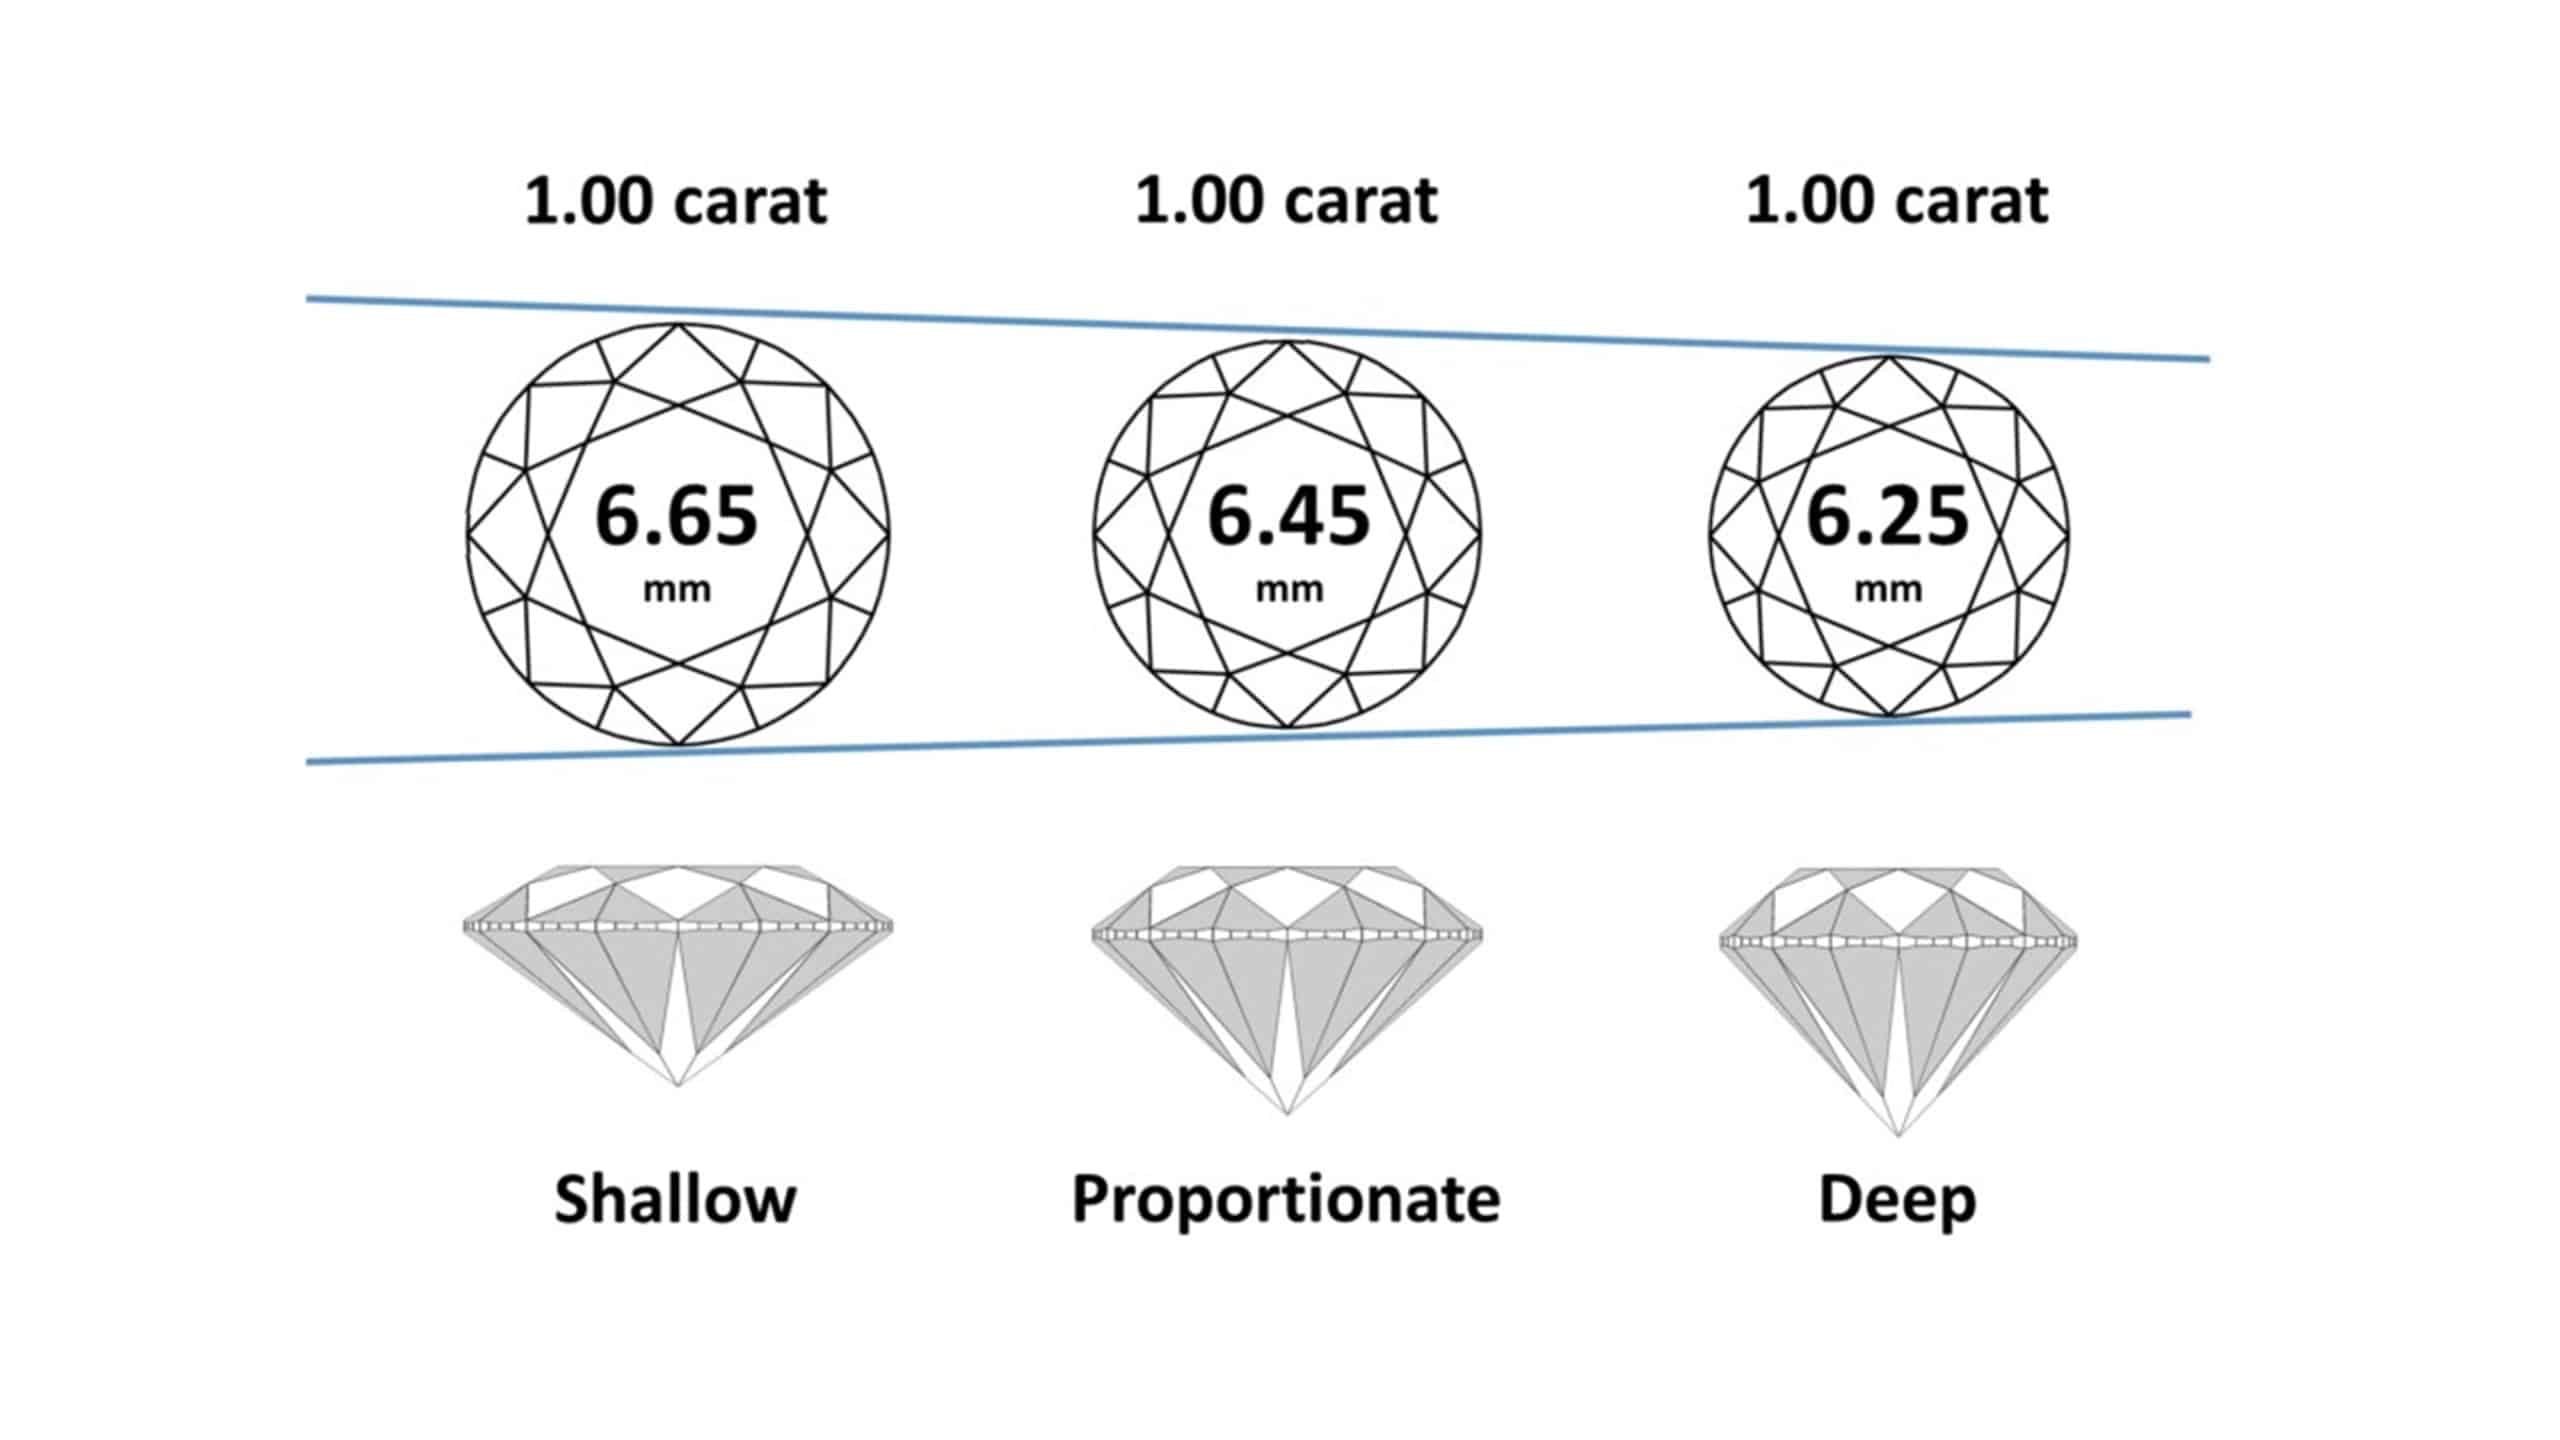 example of diamond weght estimation chart based on shape